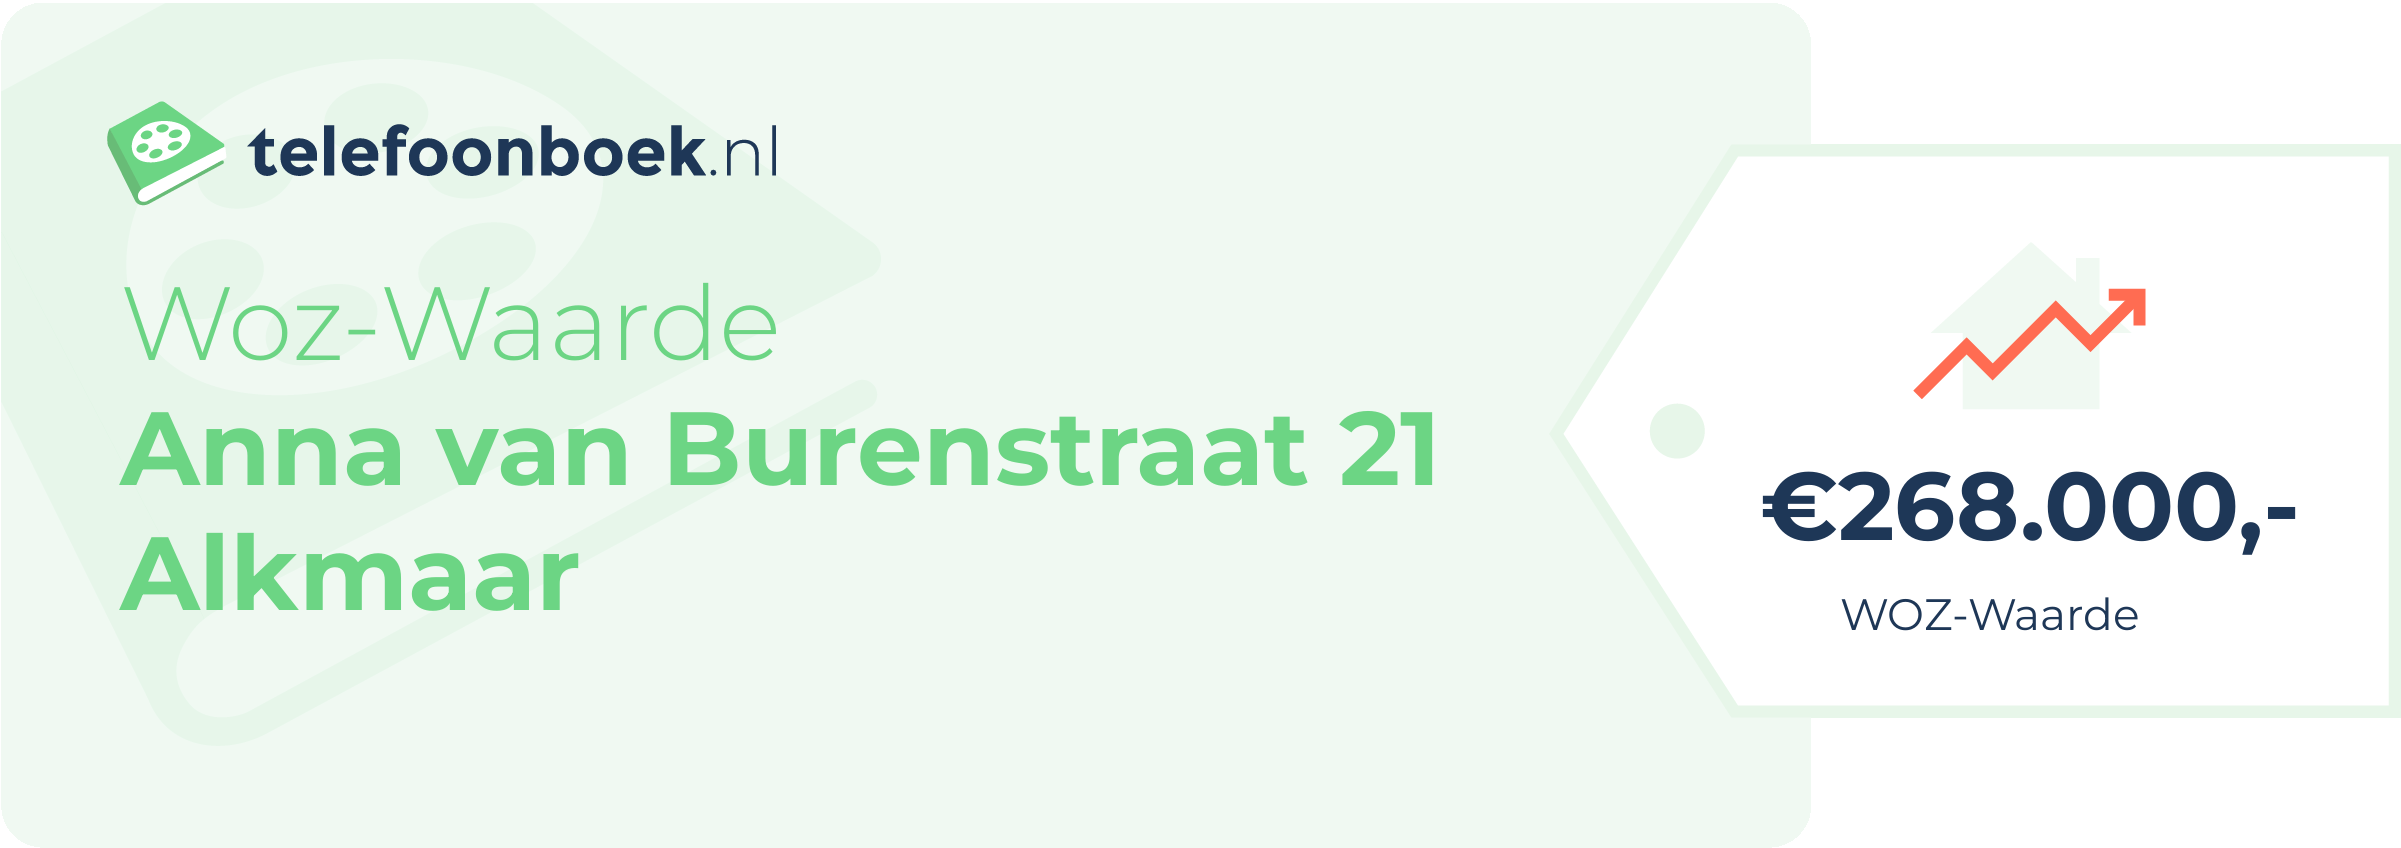 WOZ-waarde Anna Van Burenstraat 21 Alkmaar